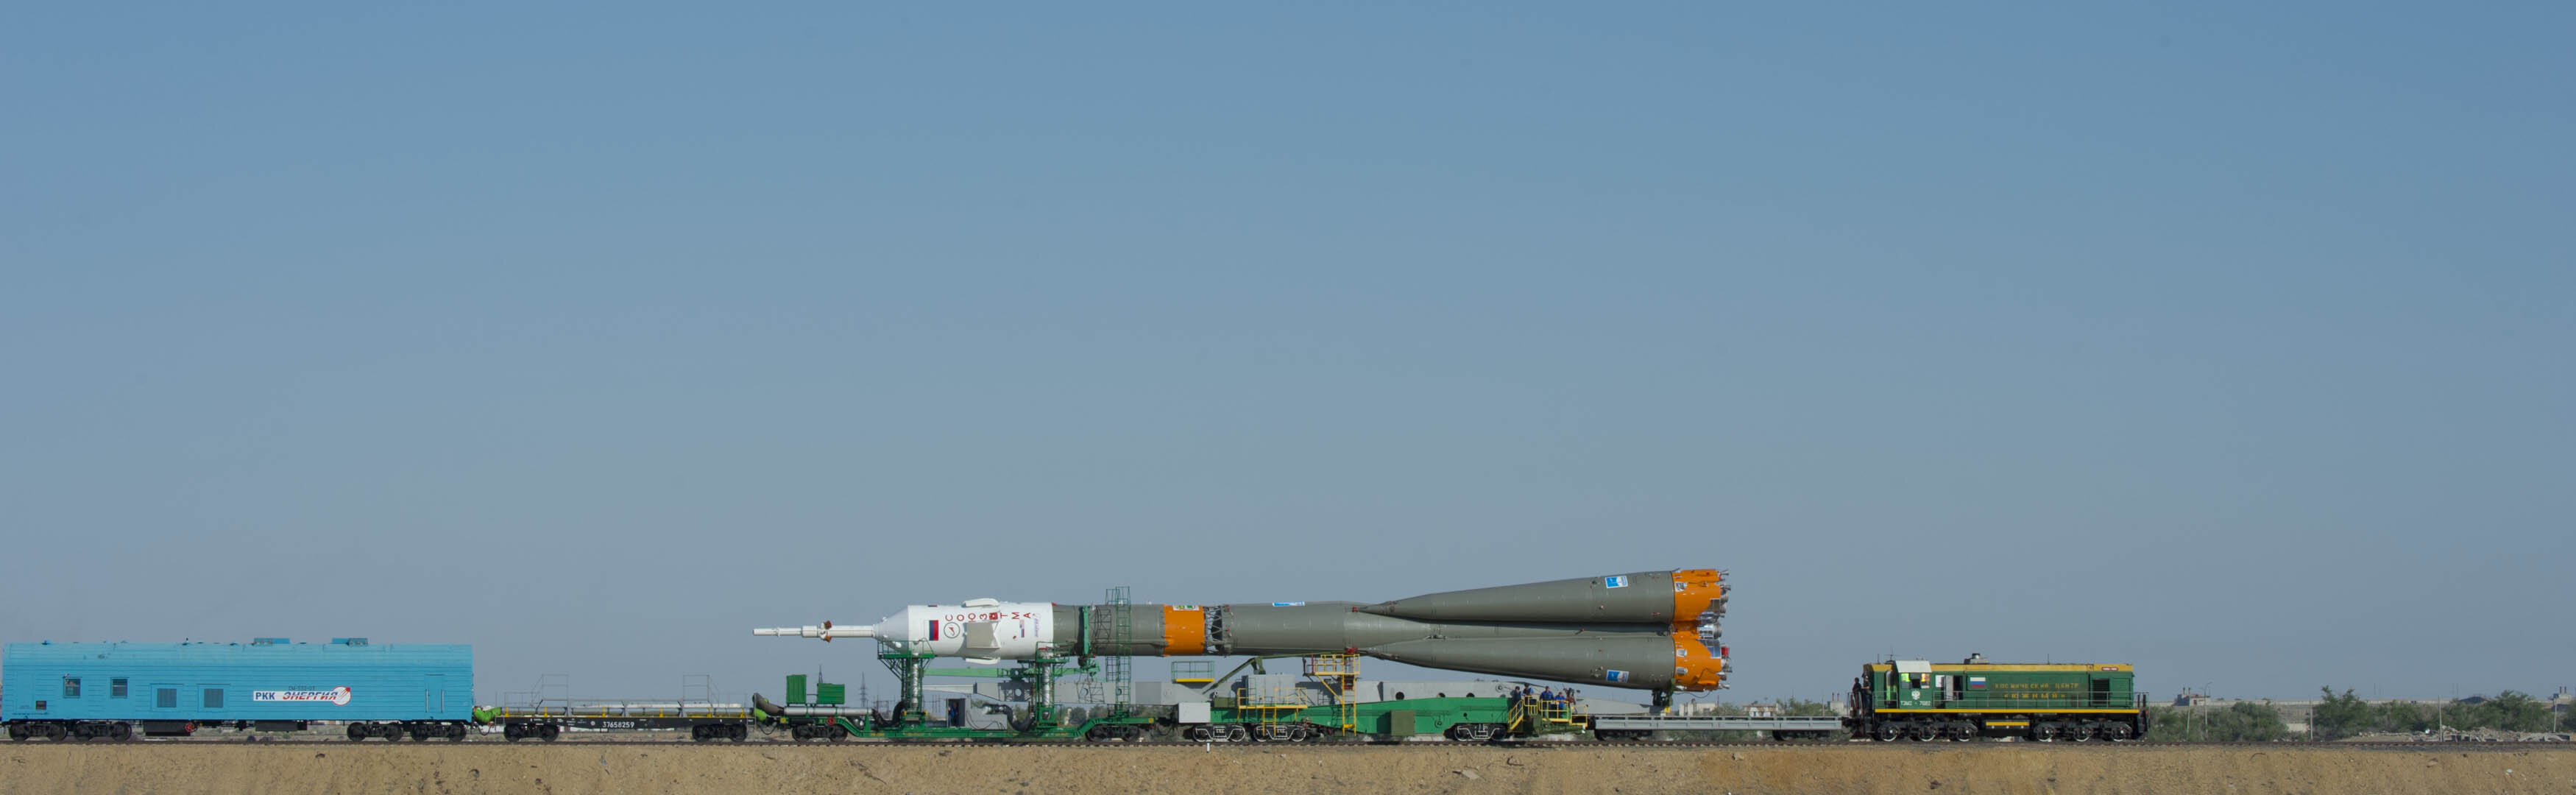 Soyuz moving to launchpad